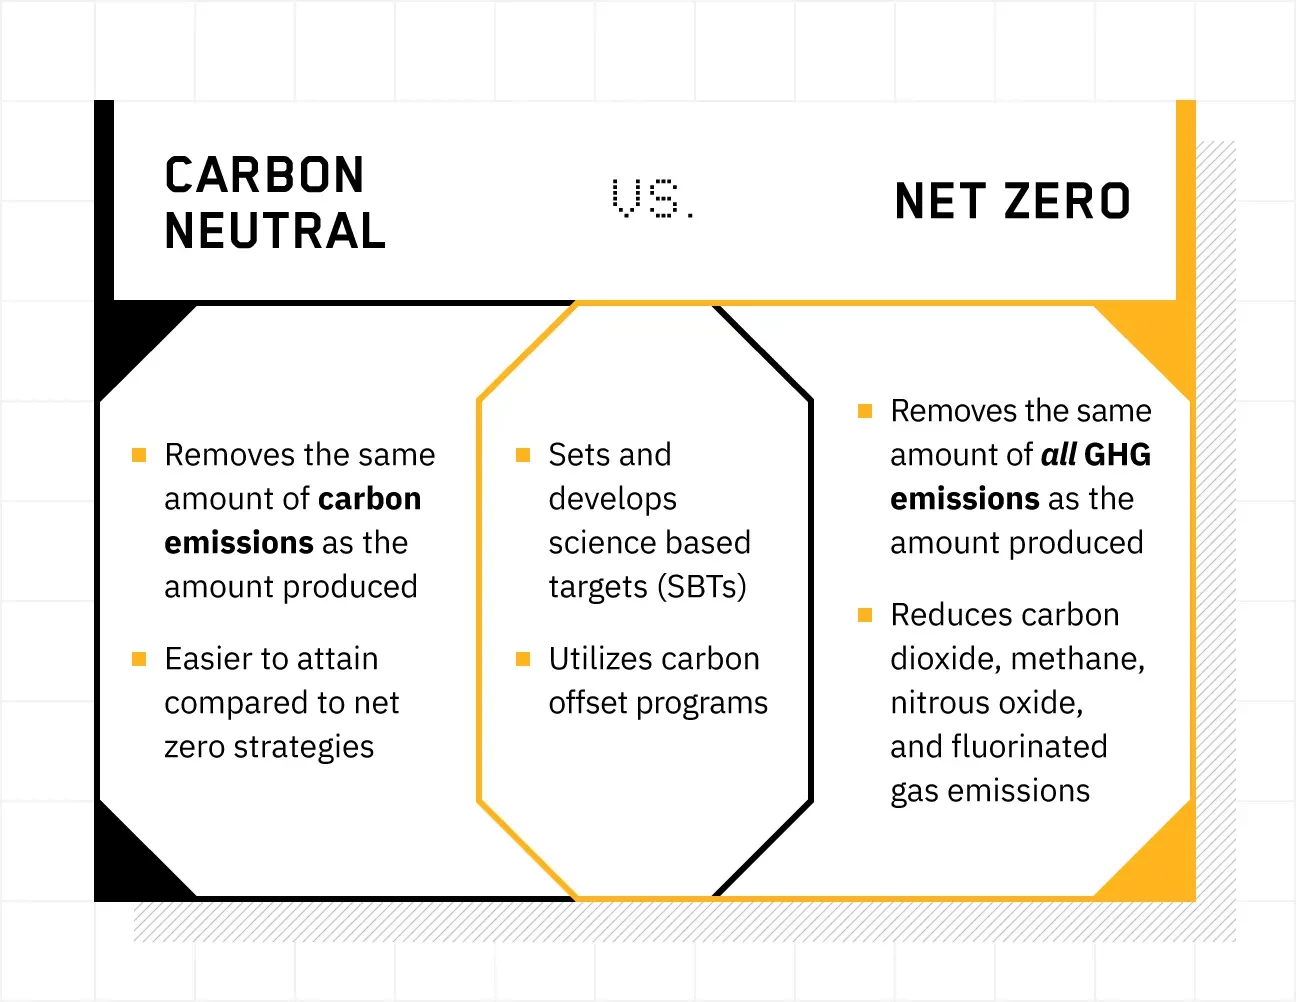 a Venn diagram illustrates the differences between carbon neutral vs. net zero emission goals